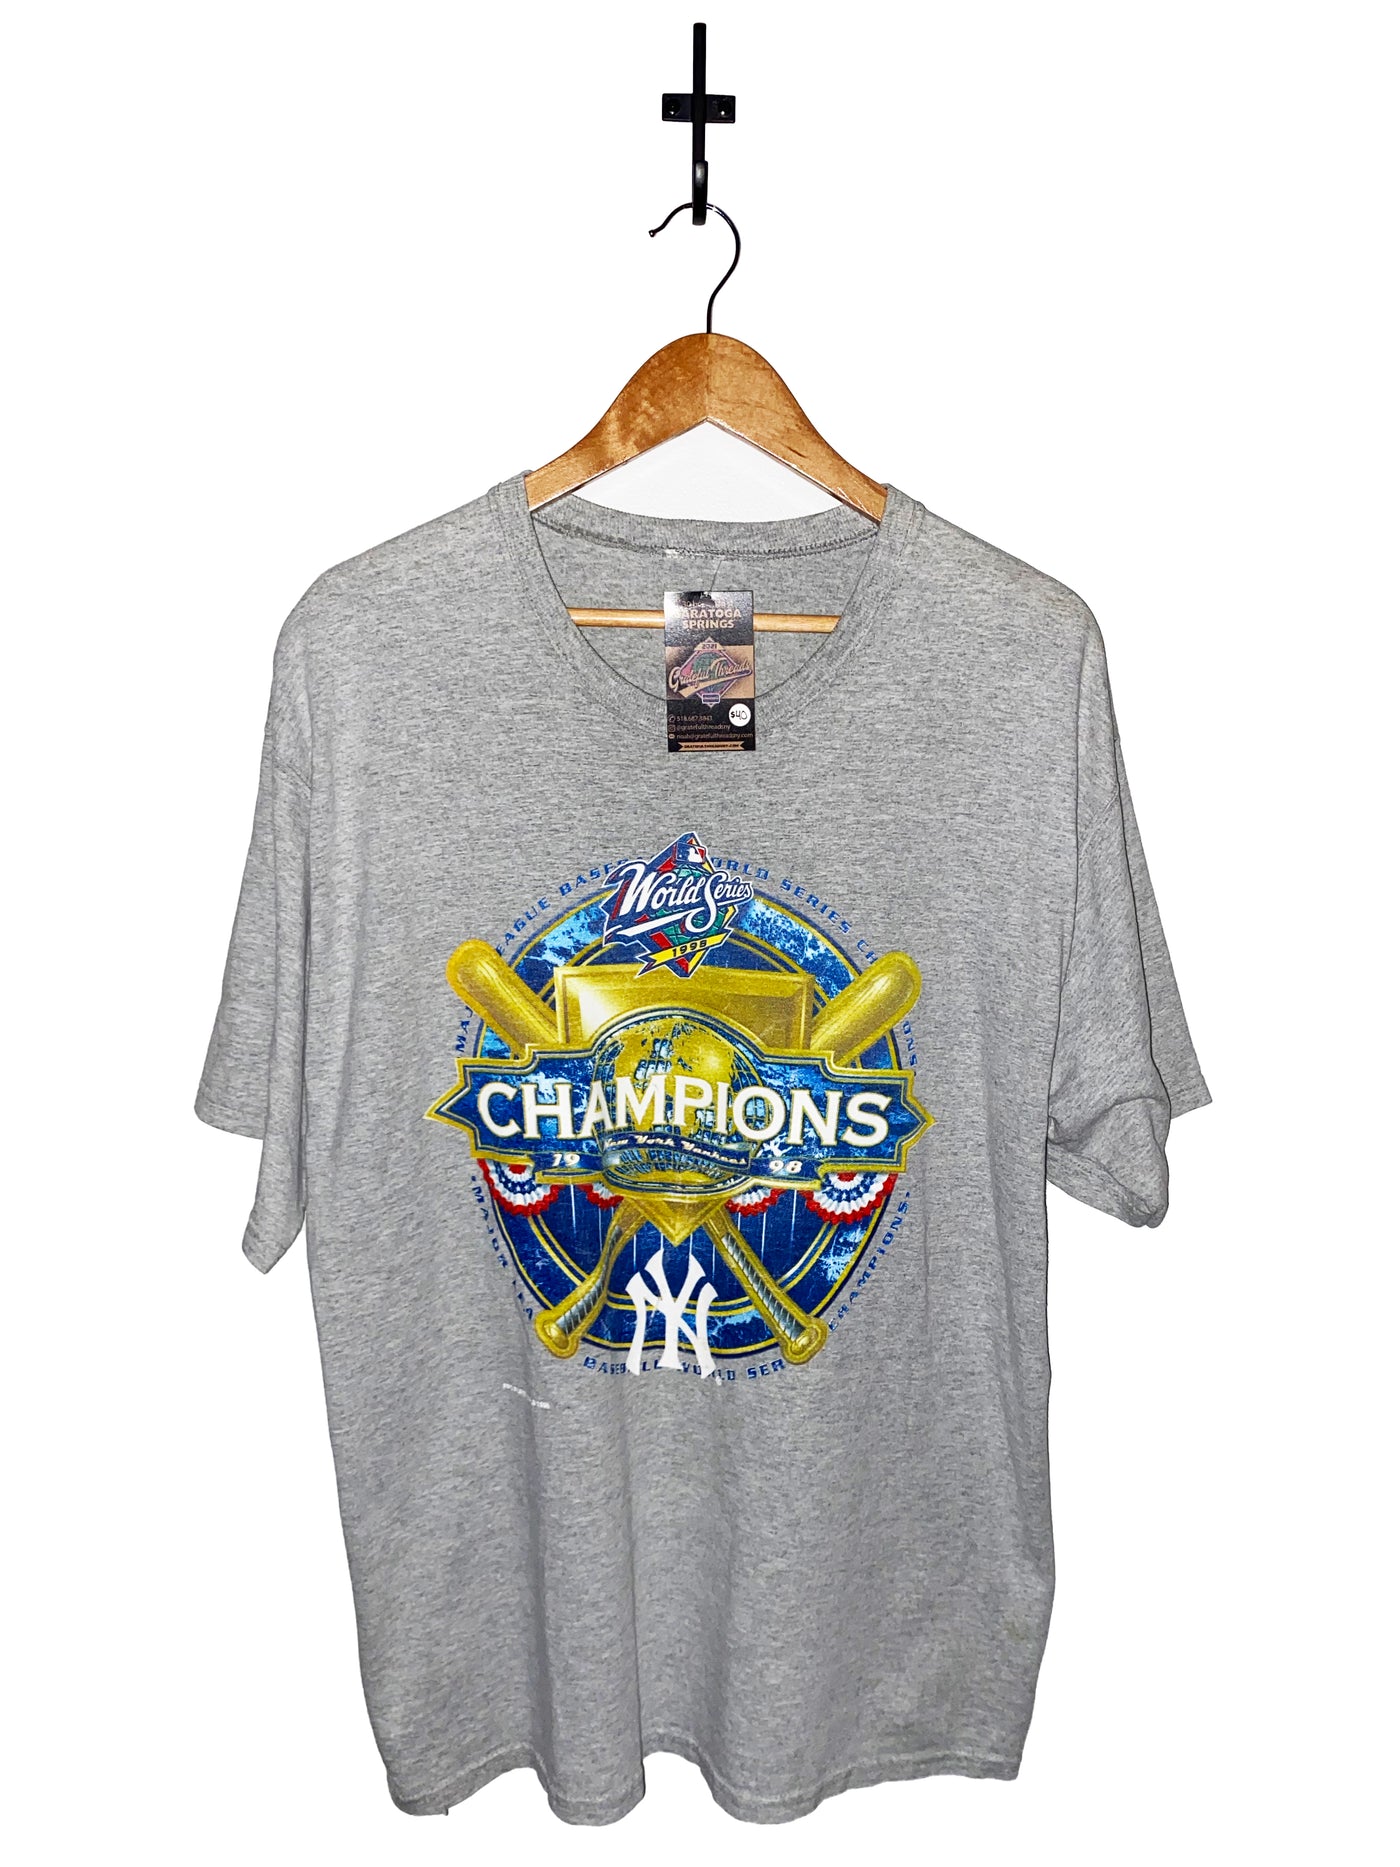 Vintage 1998 Yankees World Series Champion T-Shirt